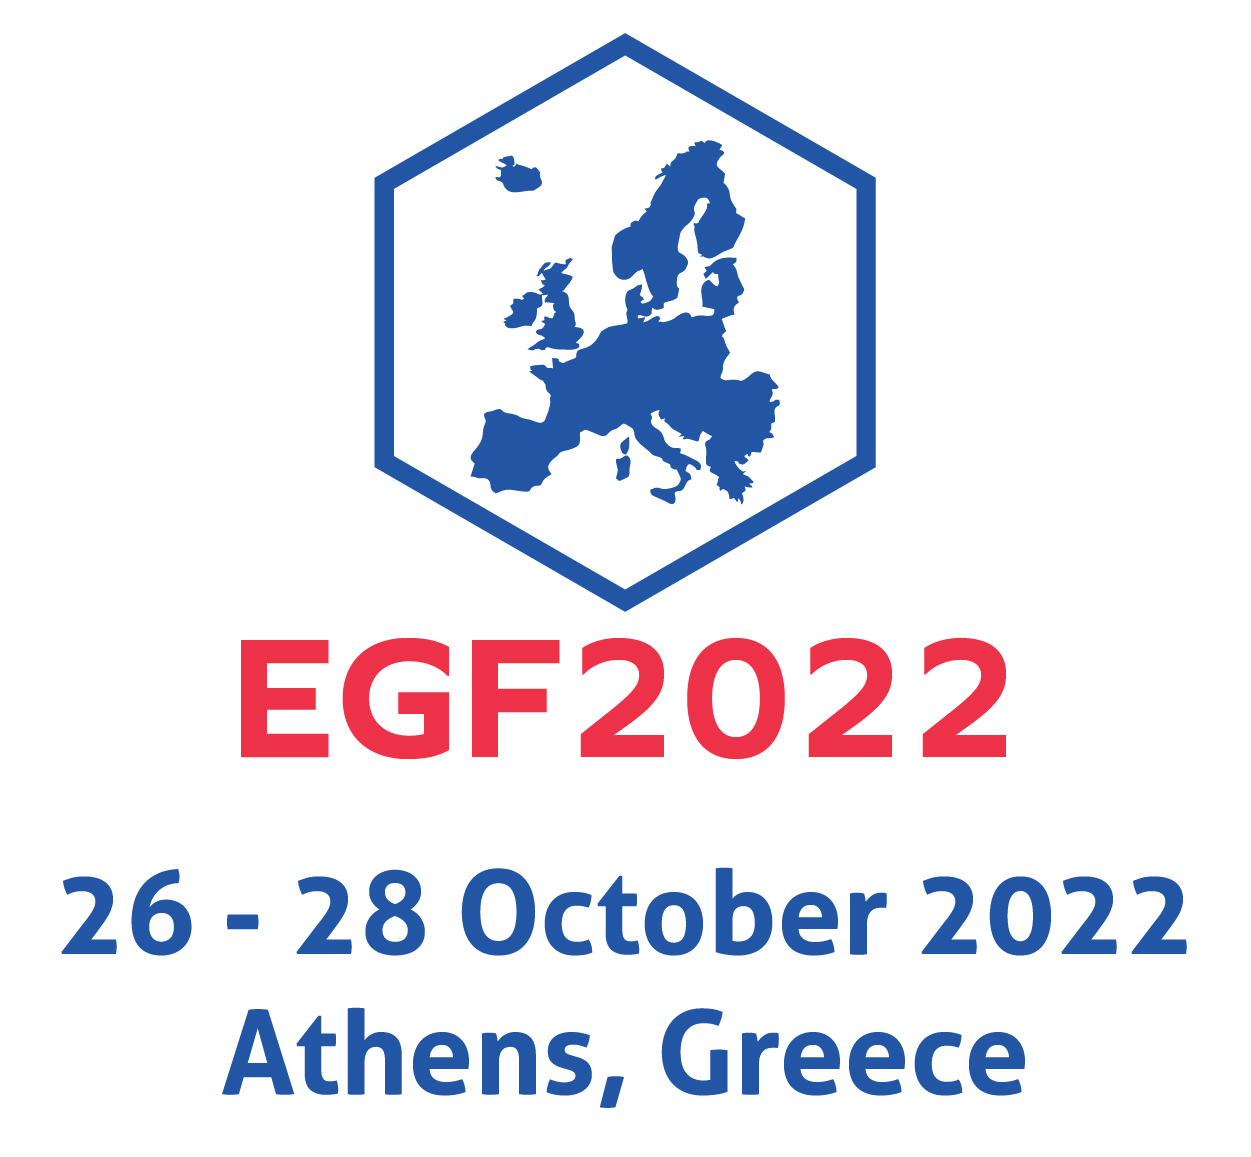 The 7th Ed. of the European Graphene Forum - EGF 2022